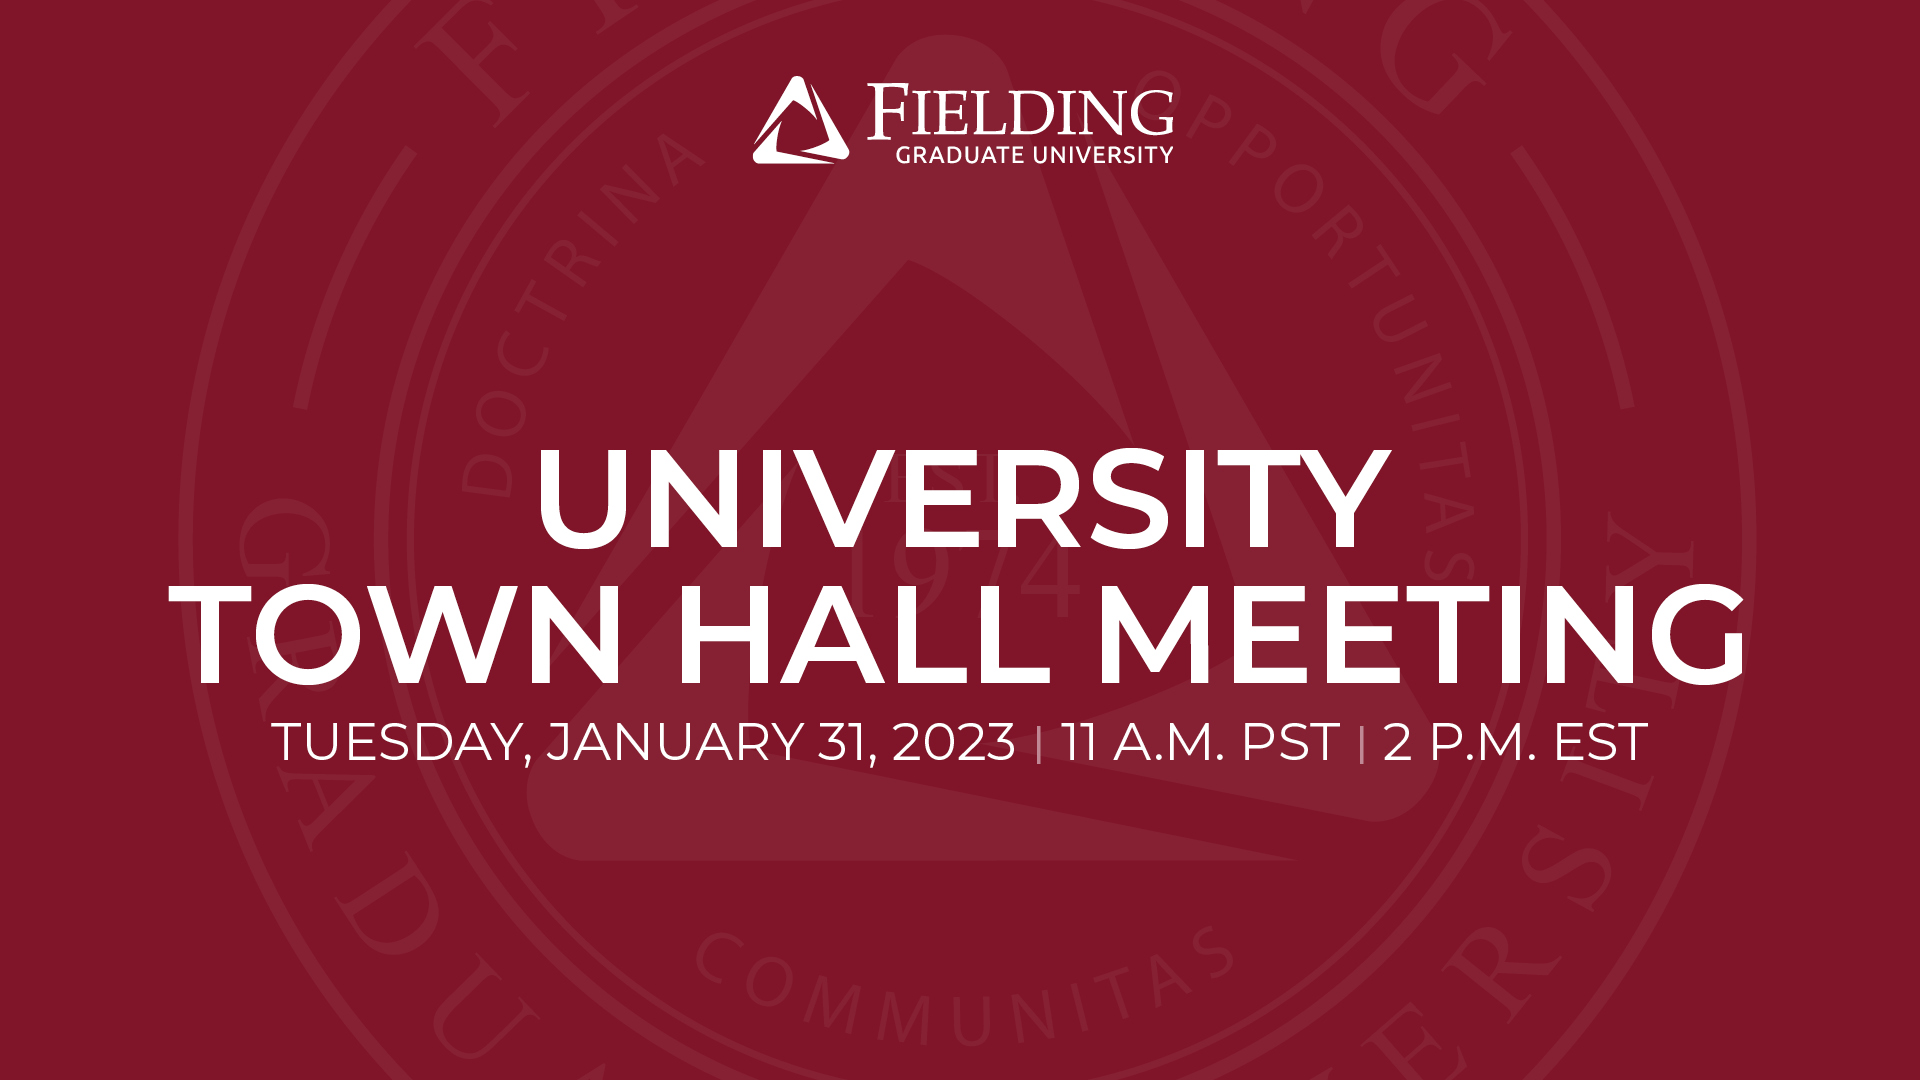 White Fielding Graduate University logo with event wording on a merlot background.